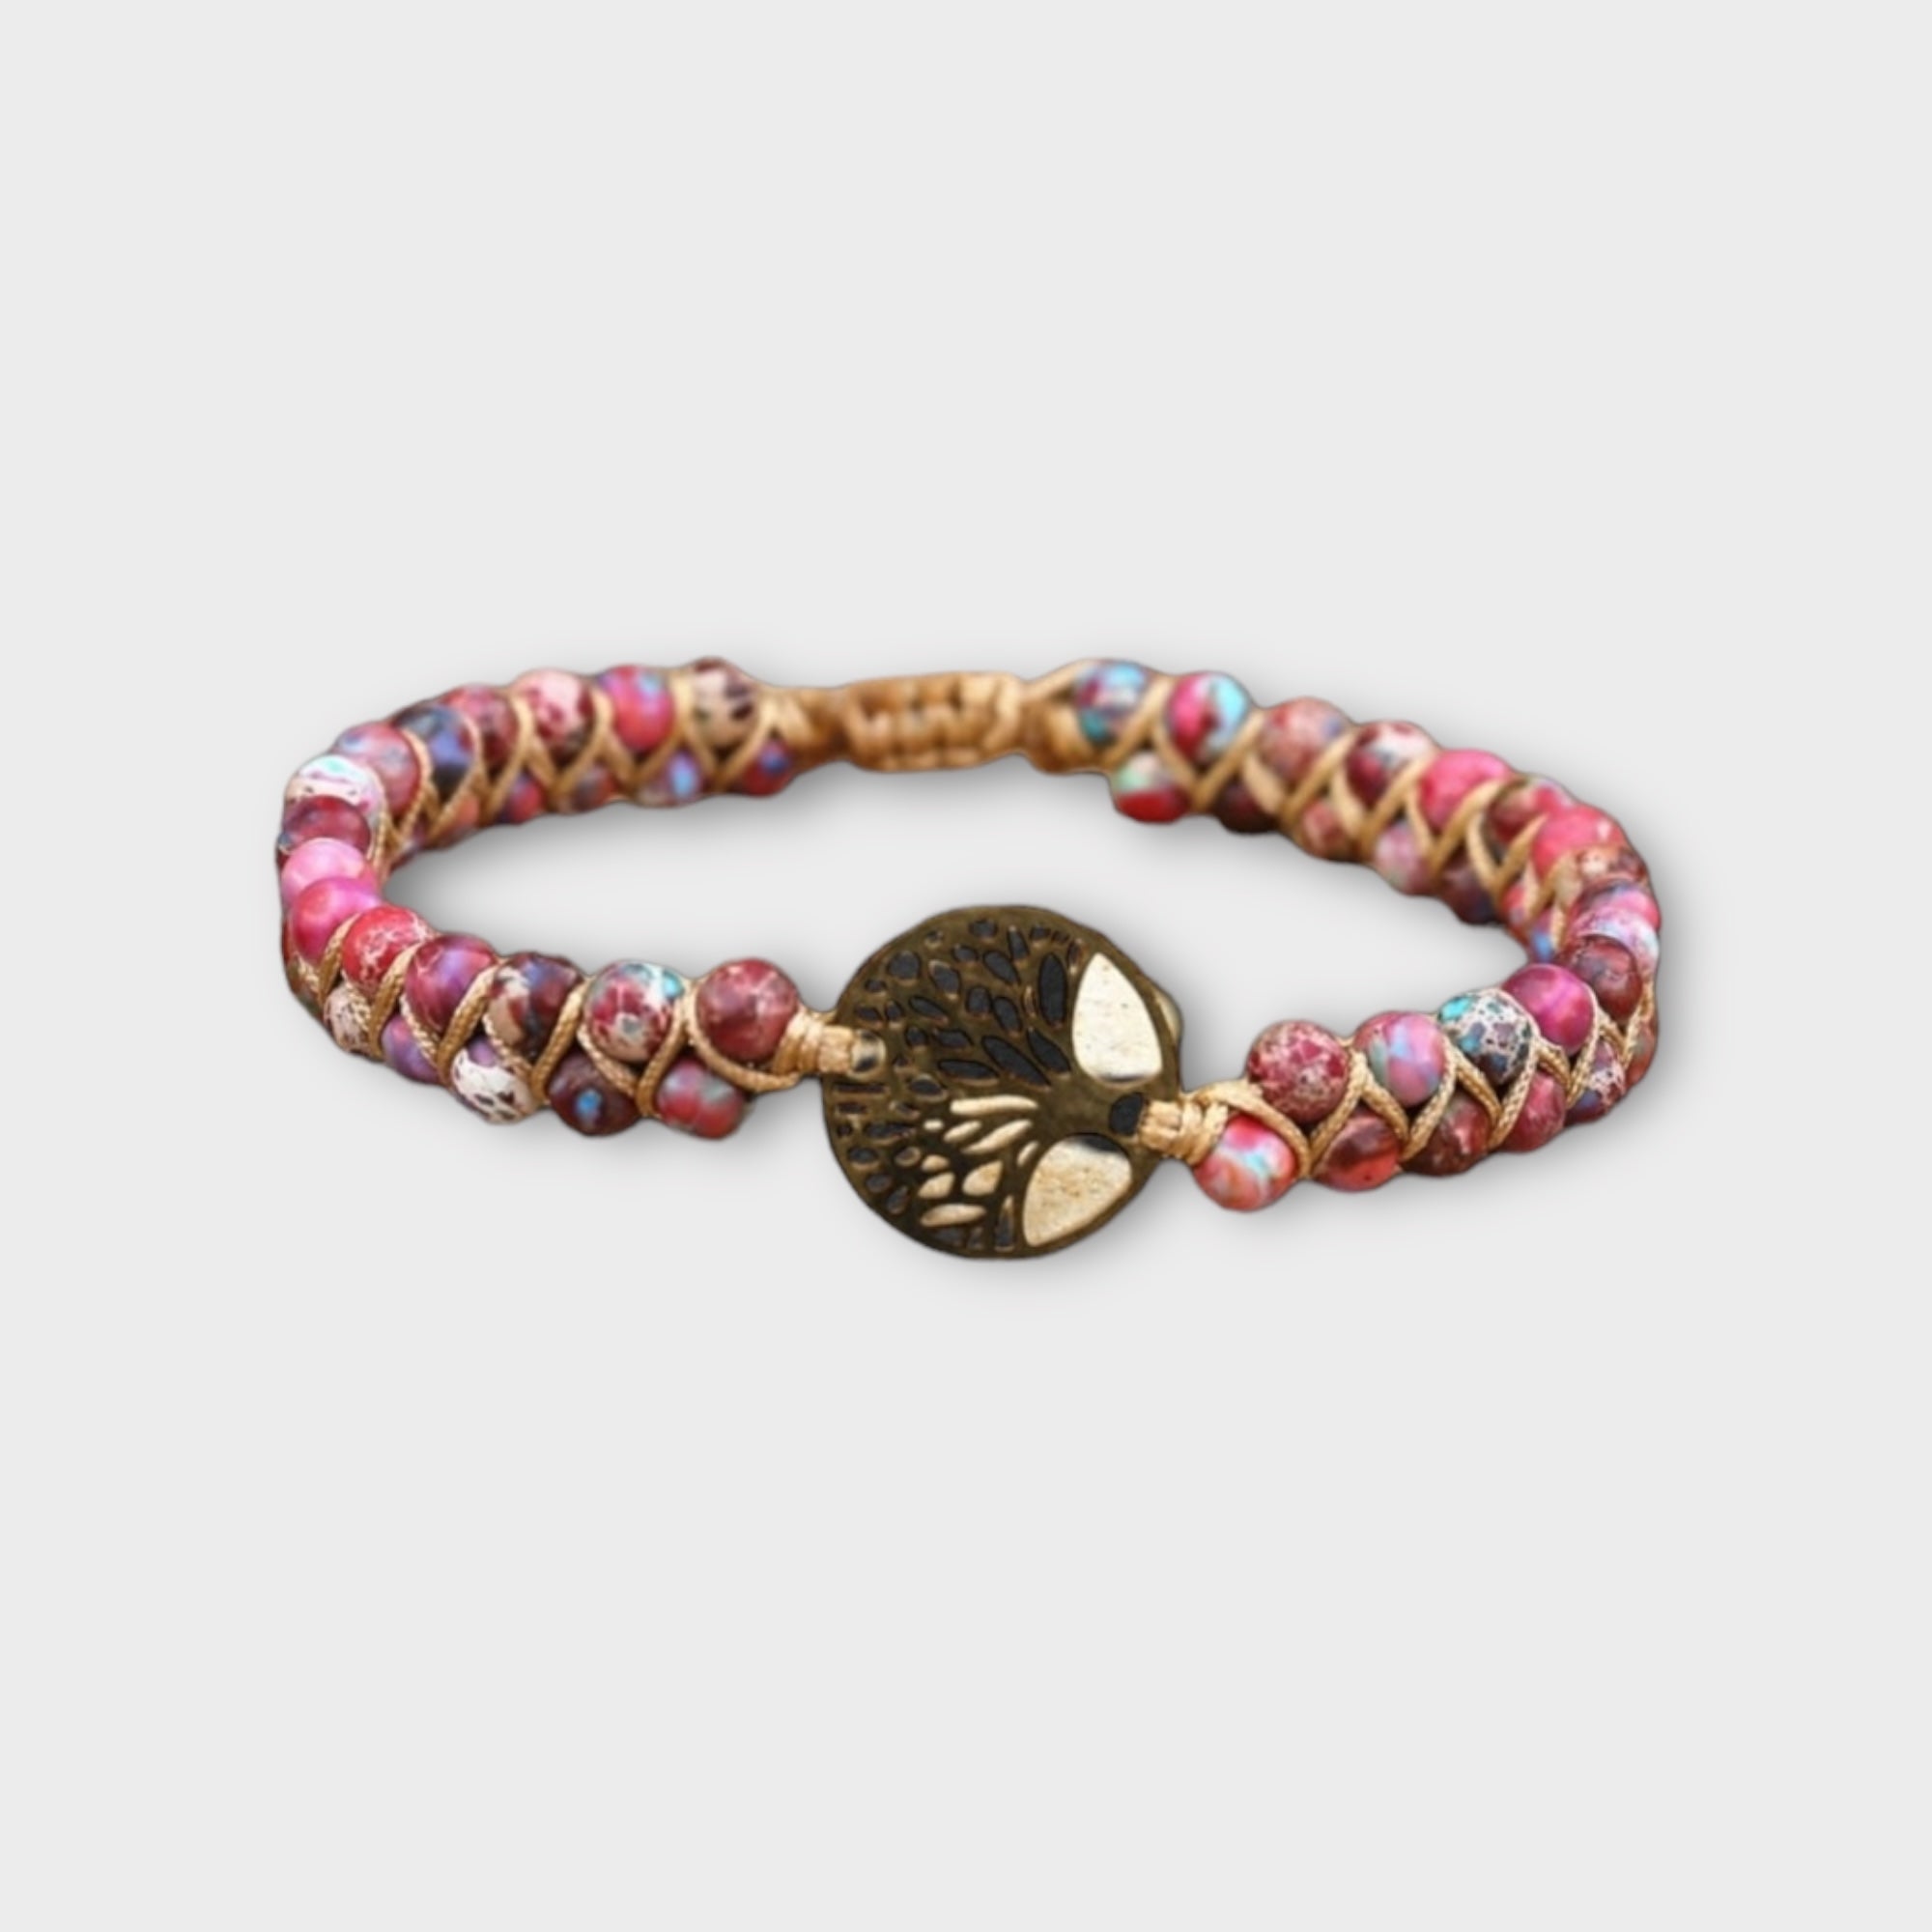 Latower™  - 'EGETT' Women's bracelet with natural stone